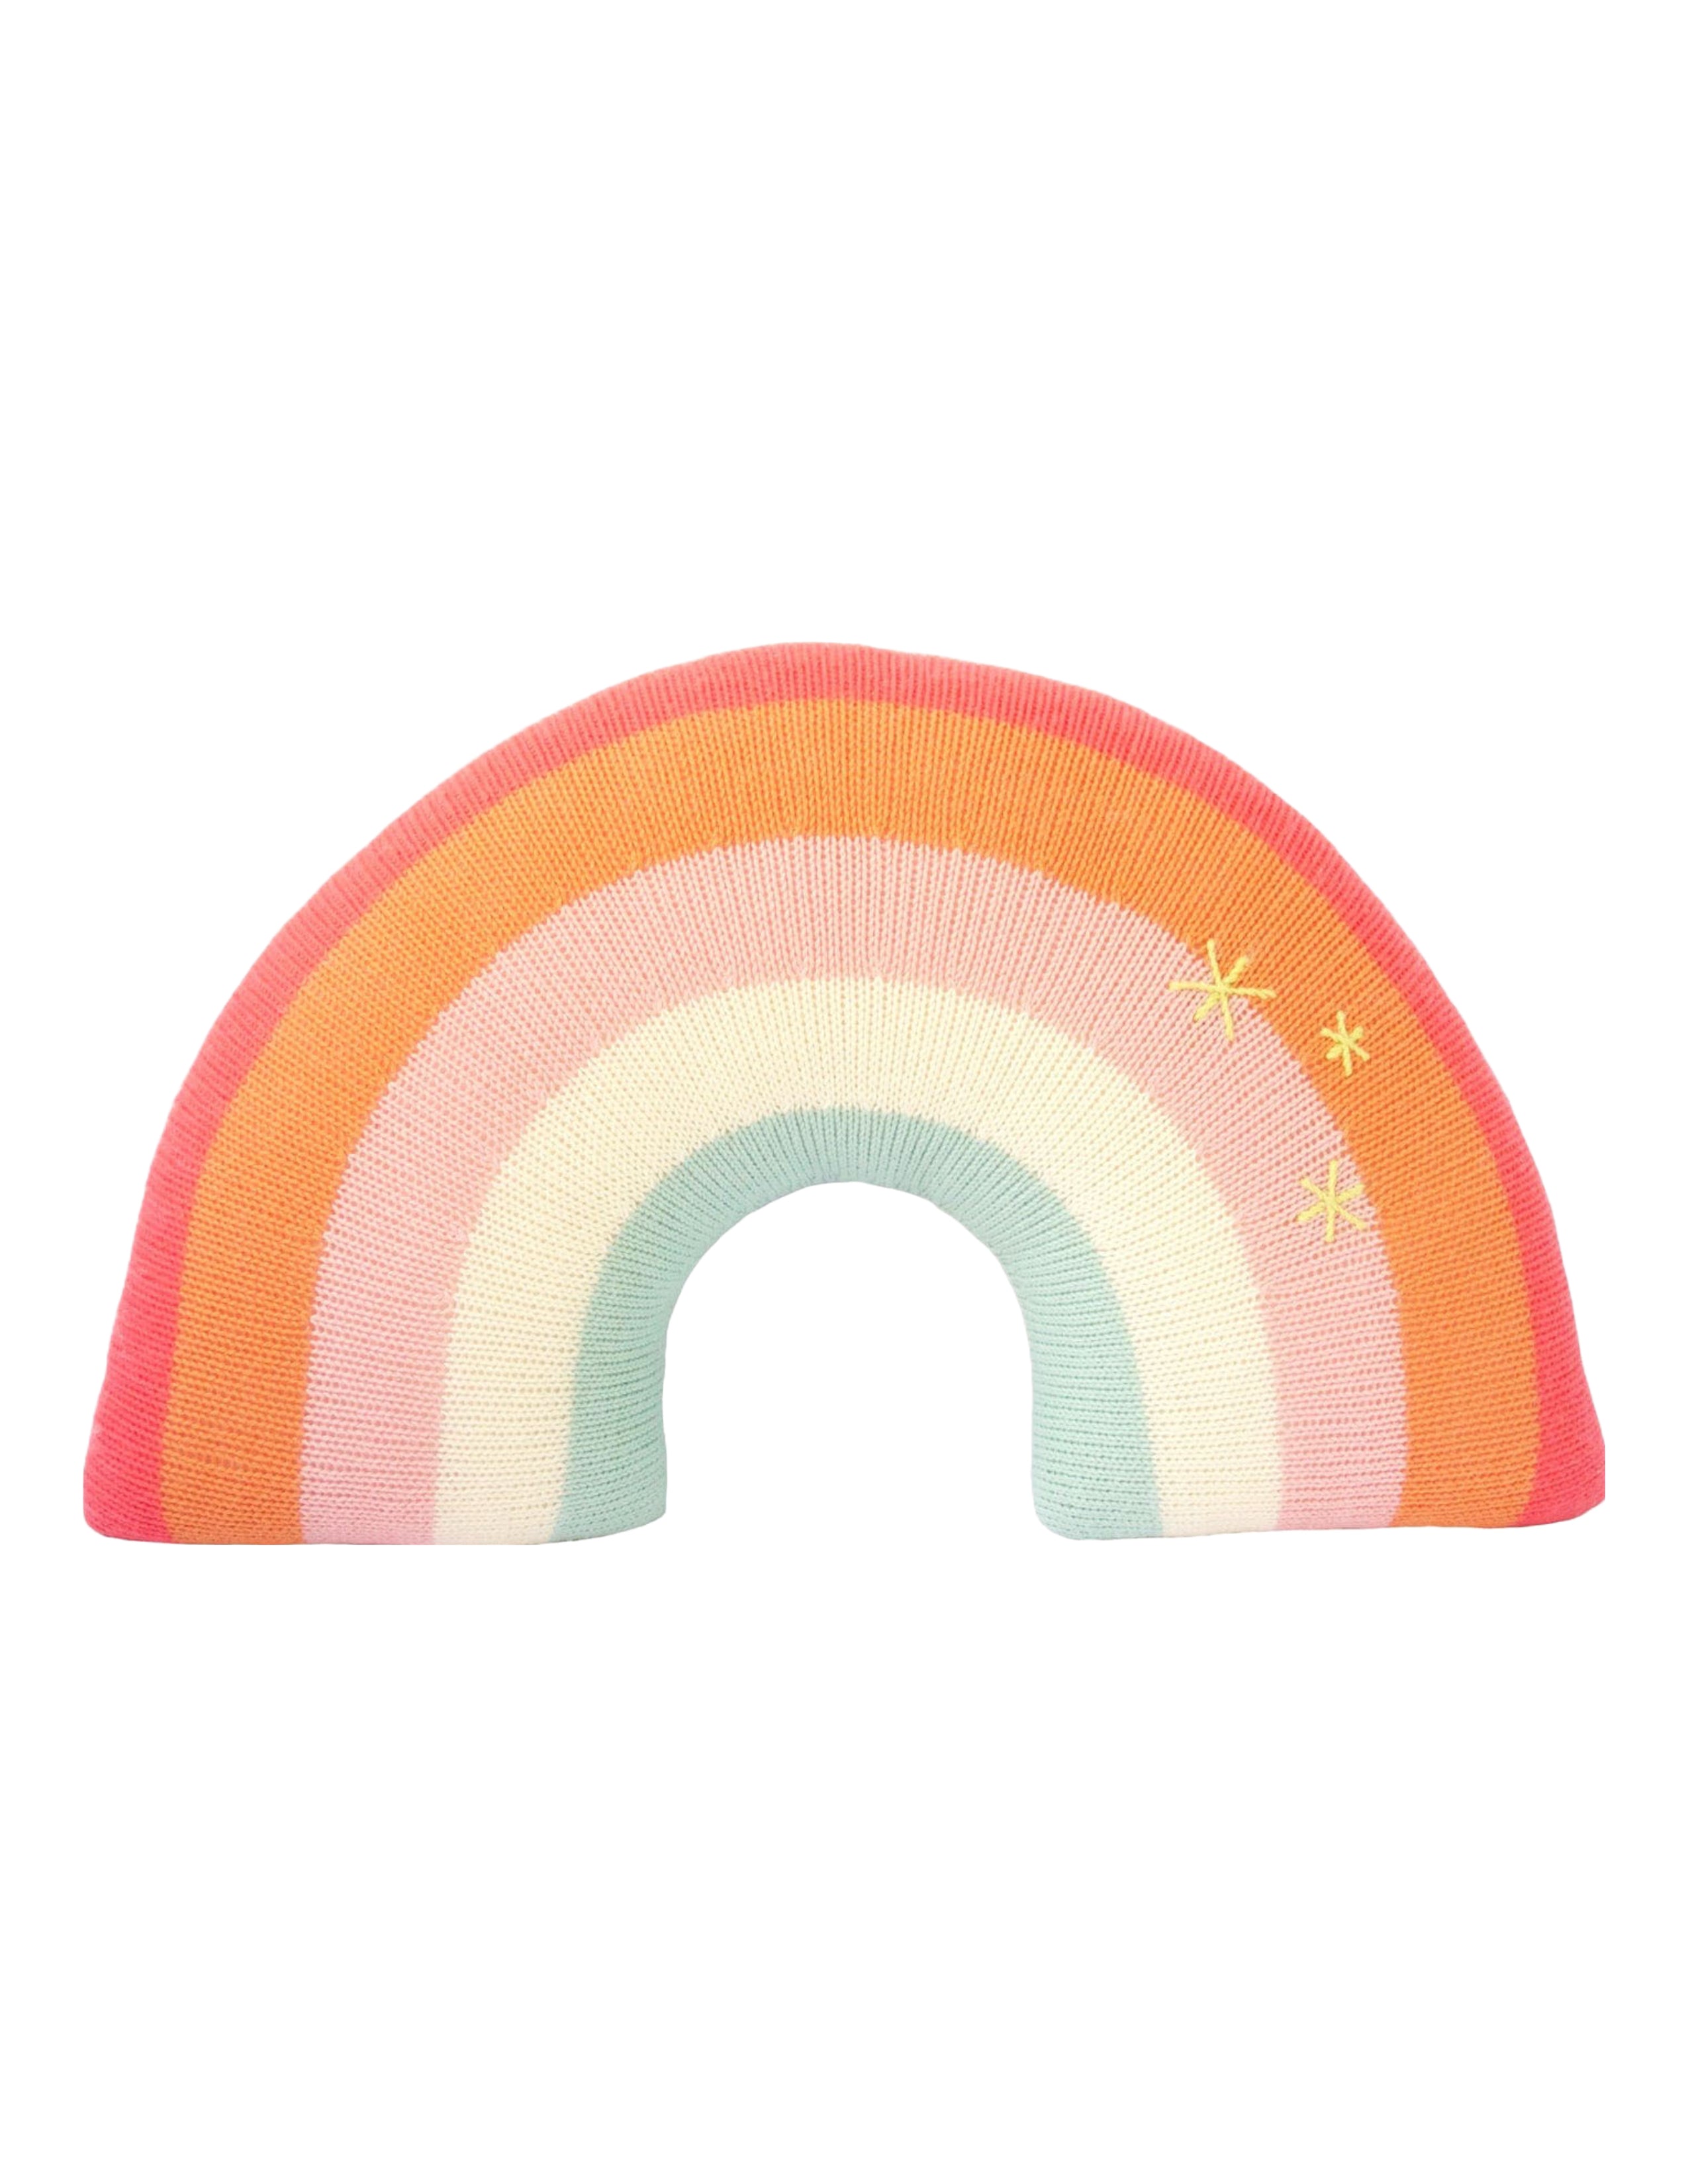 Rainbow Pillows - Pink